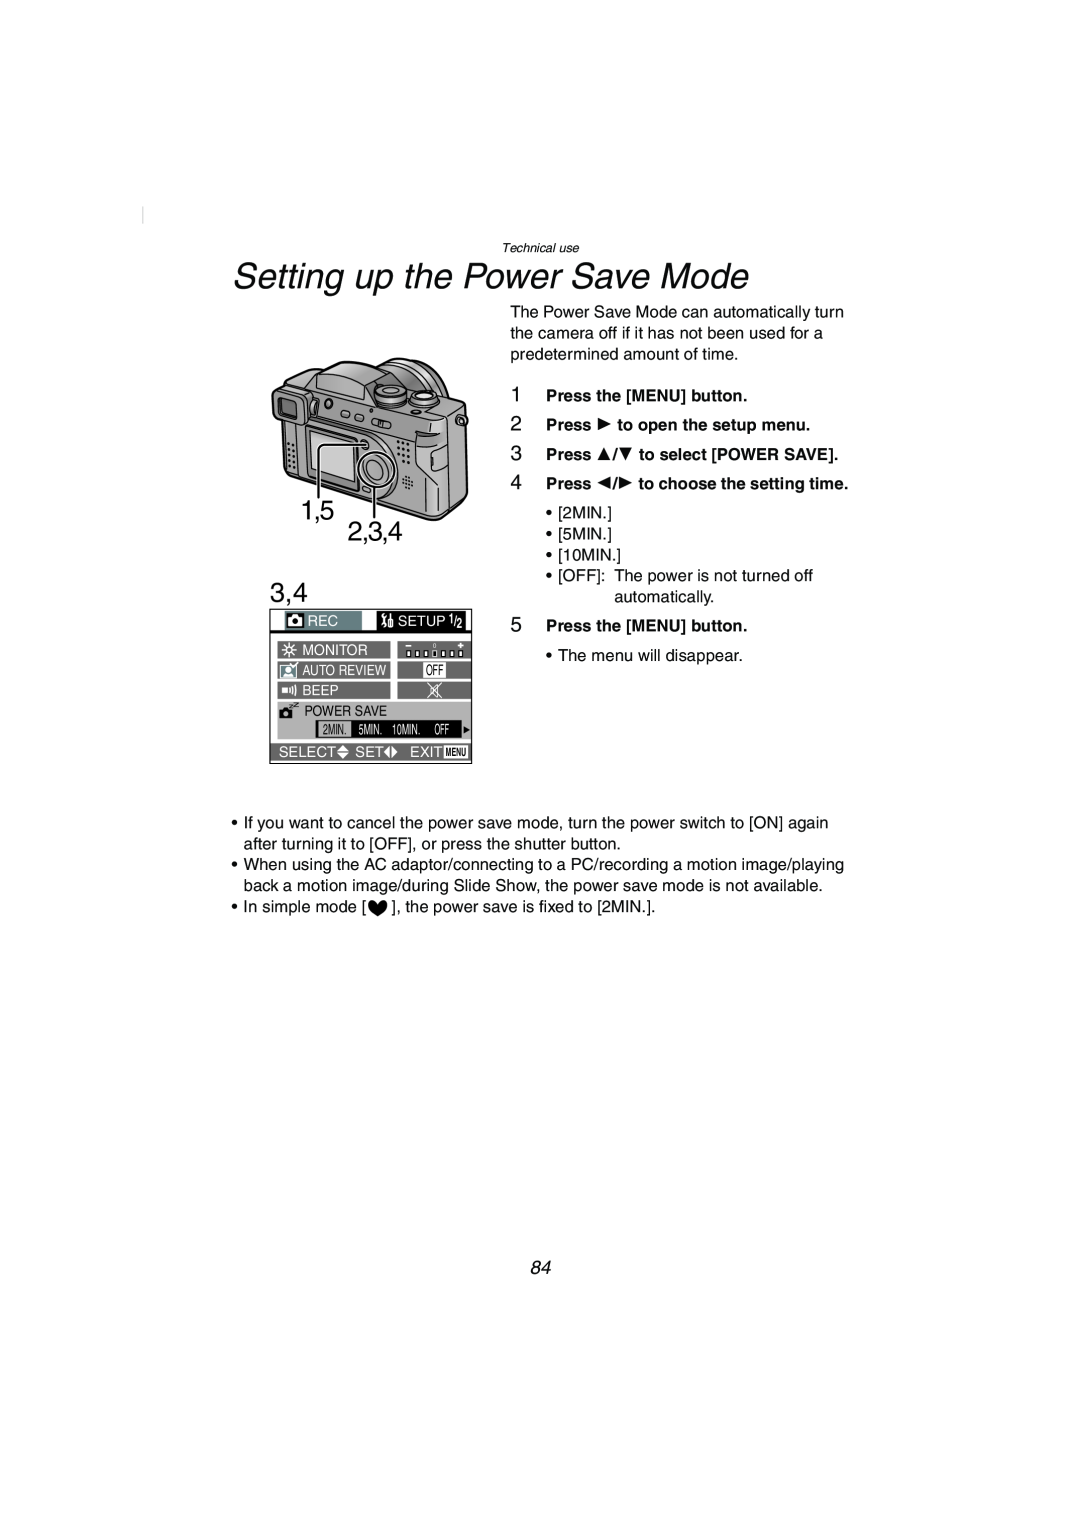 Panasonic DMC-FZ2PP Setting up the Power Save Mode, 1,5 2,3,4, Press the MENU button 2 Press 1 to open the setup menu 